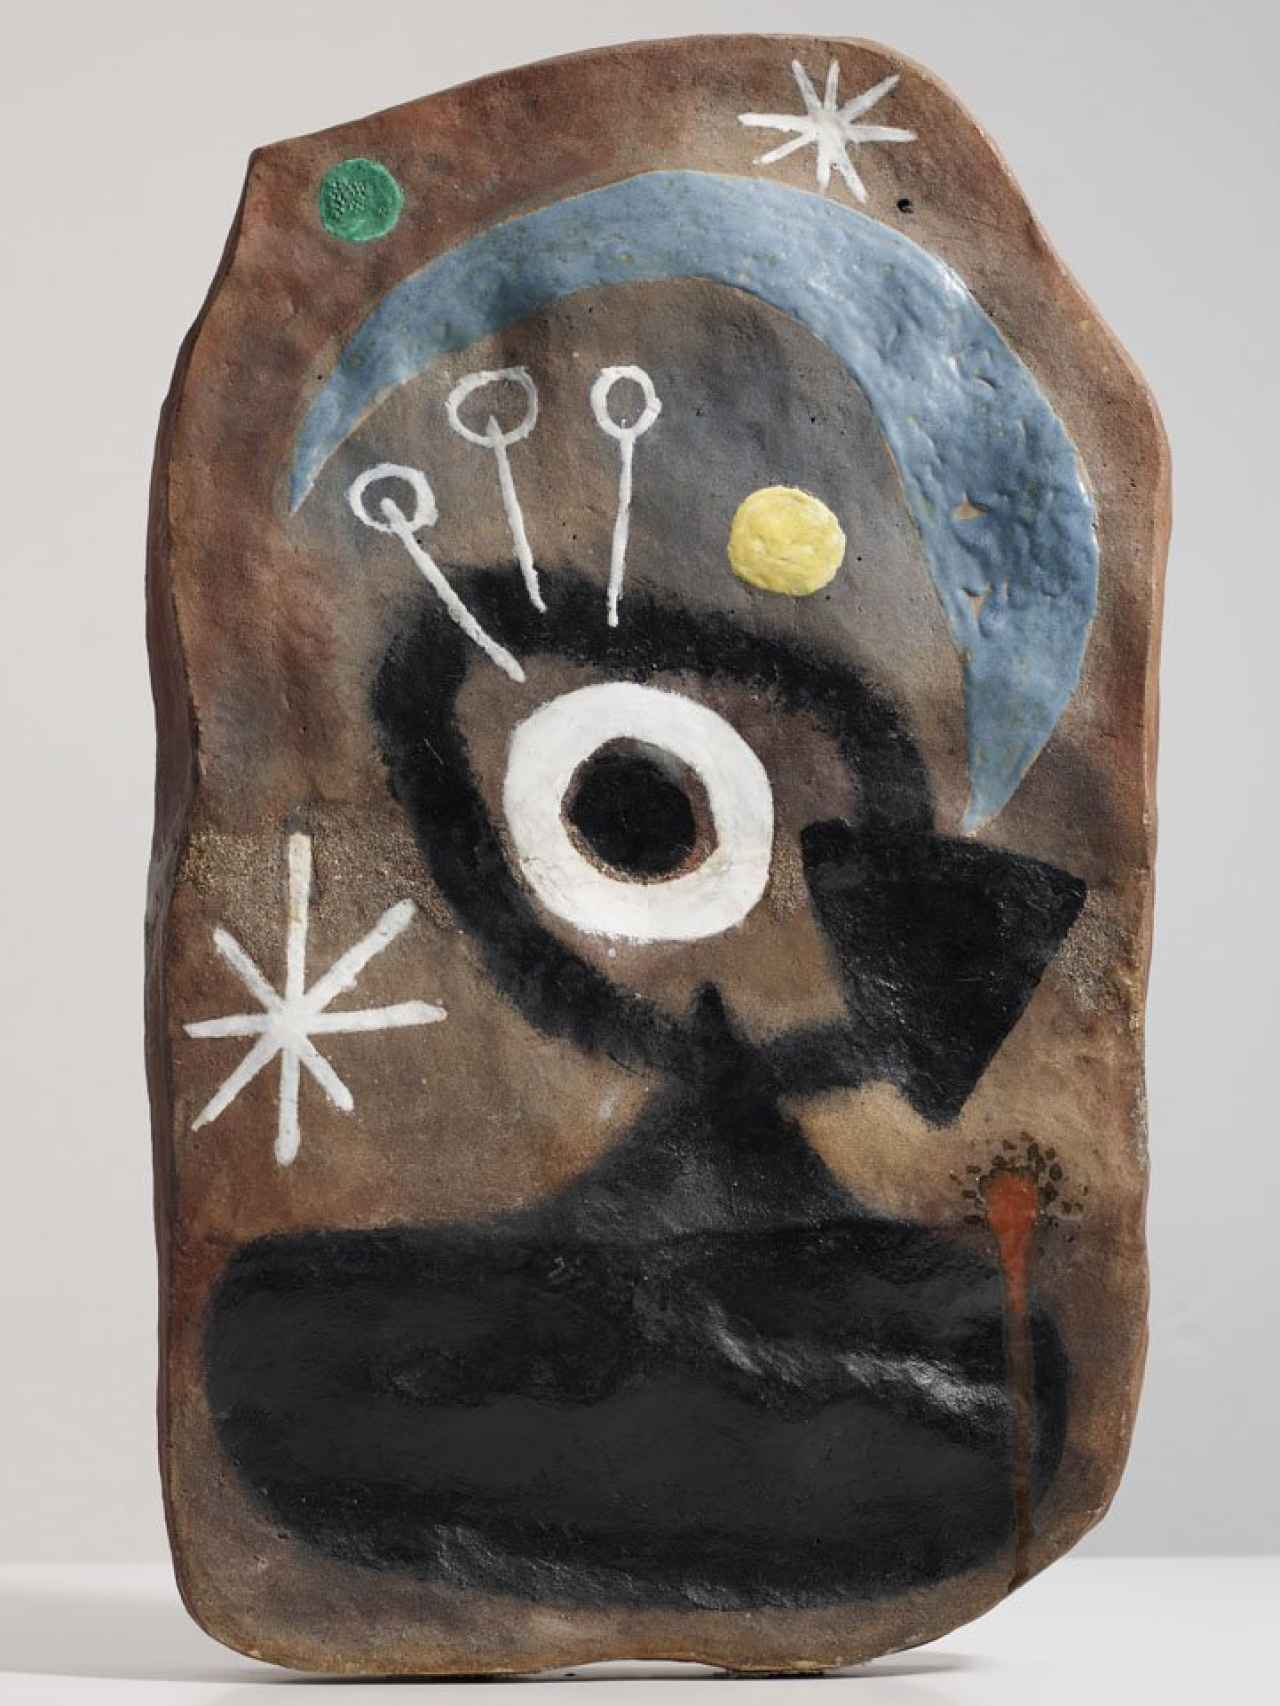 Estela (1956) de Joan Miró.